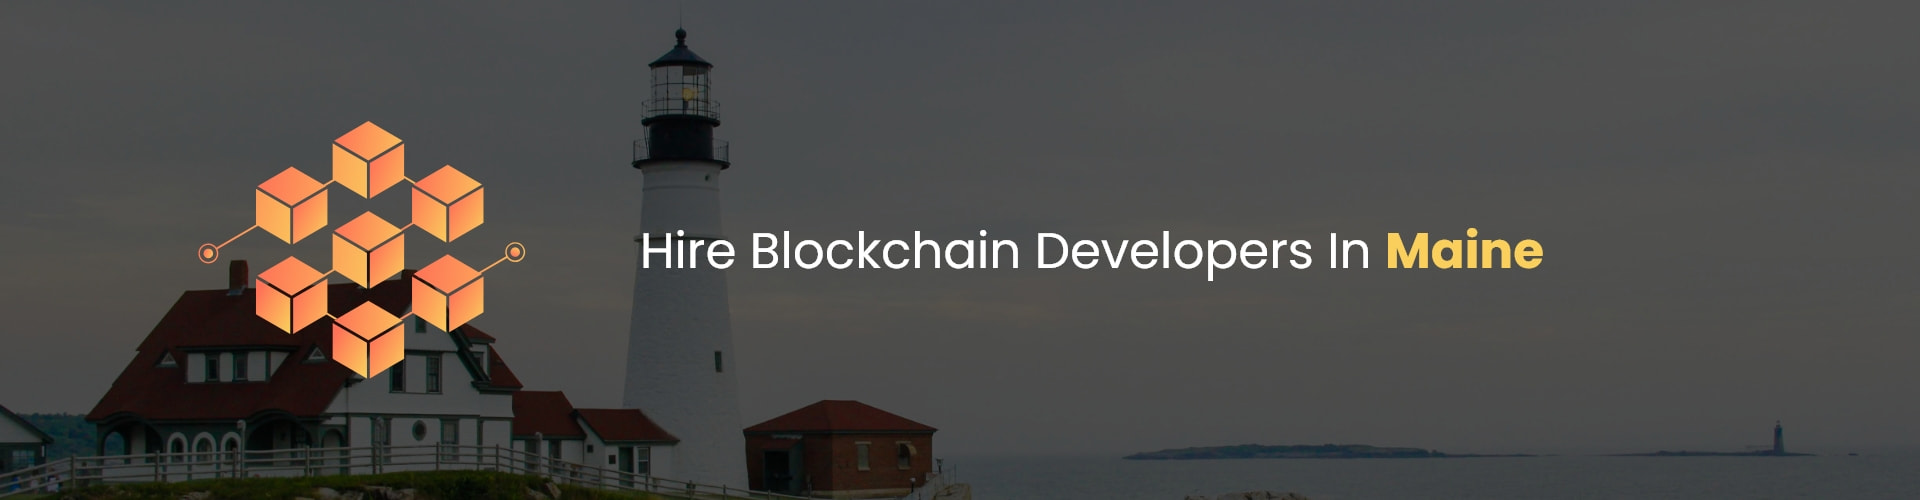 hire blockchain developers in maine